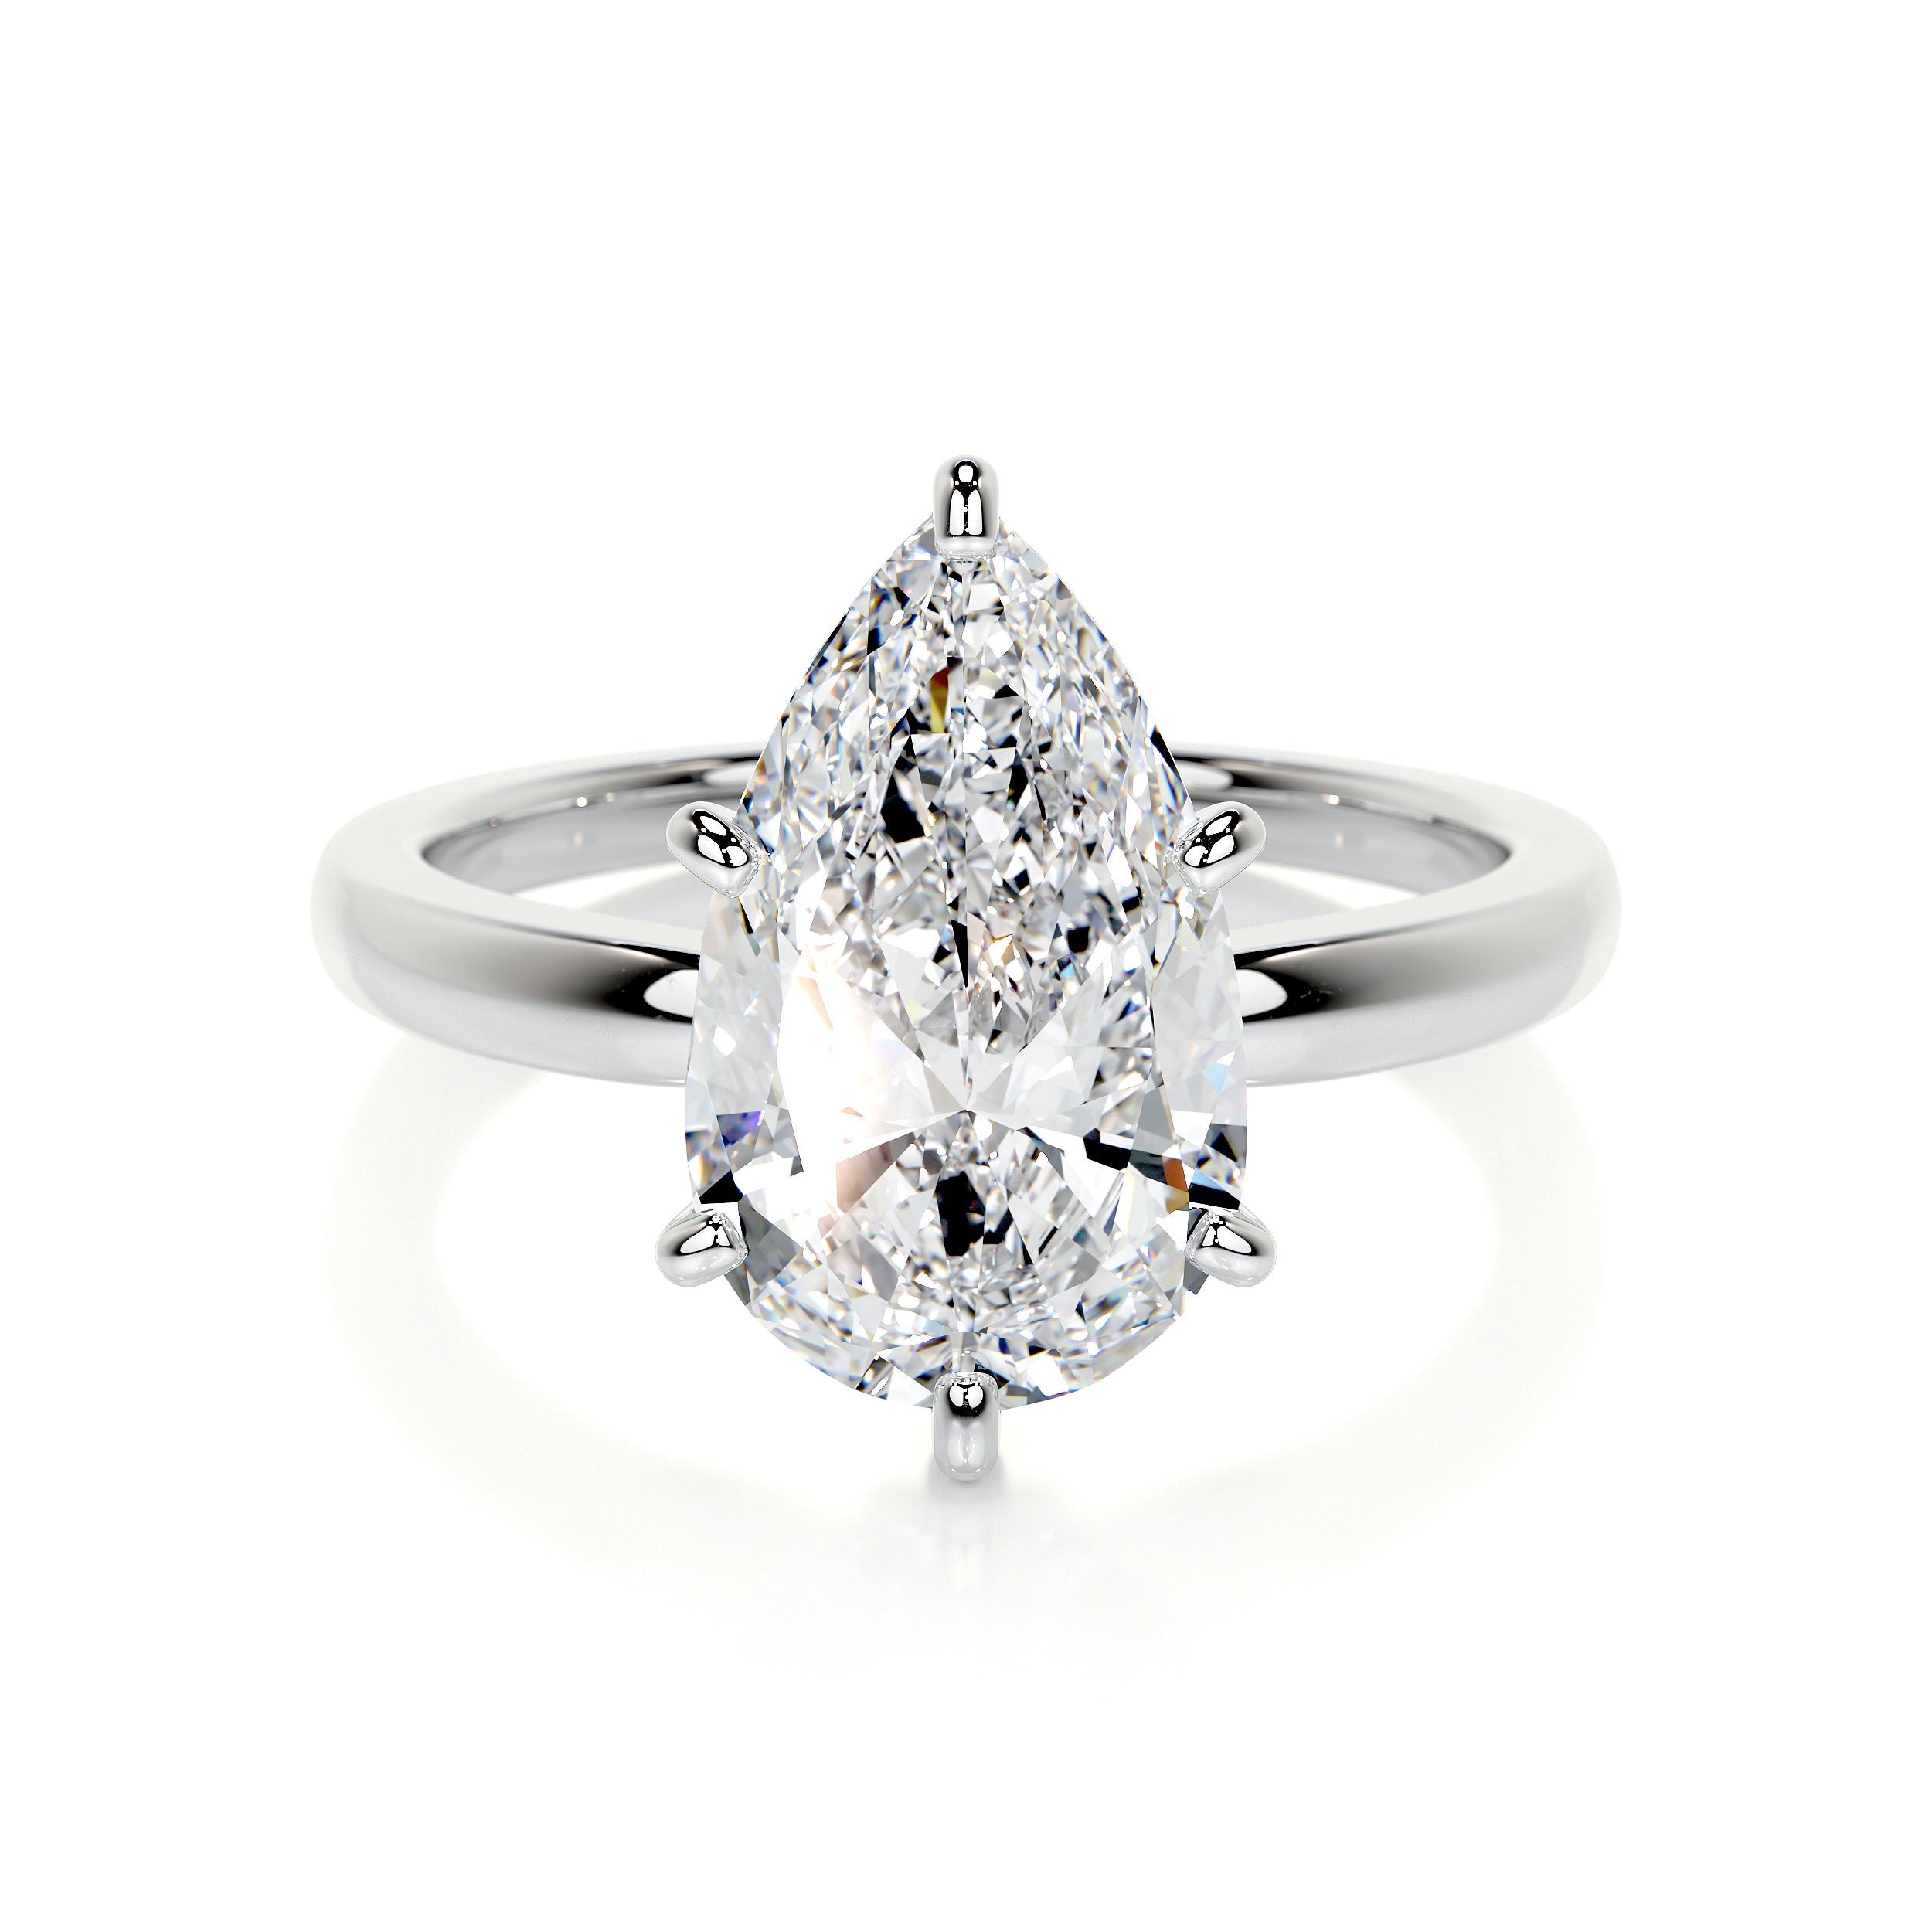 5 carat Round Diamond Engagement Ring - YouTube